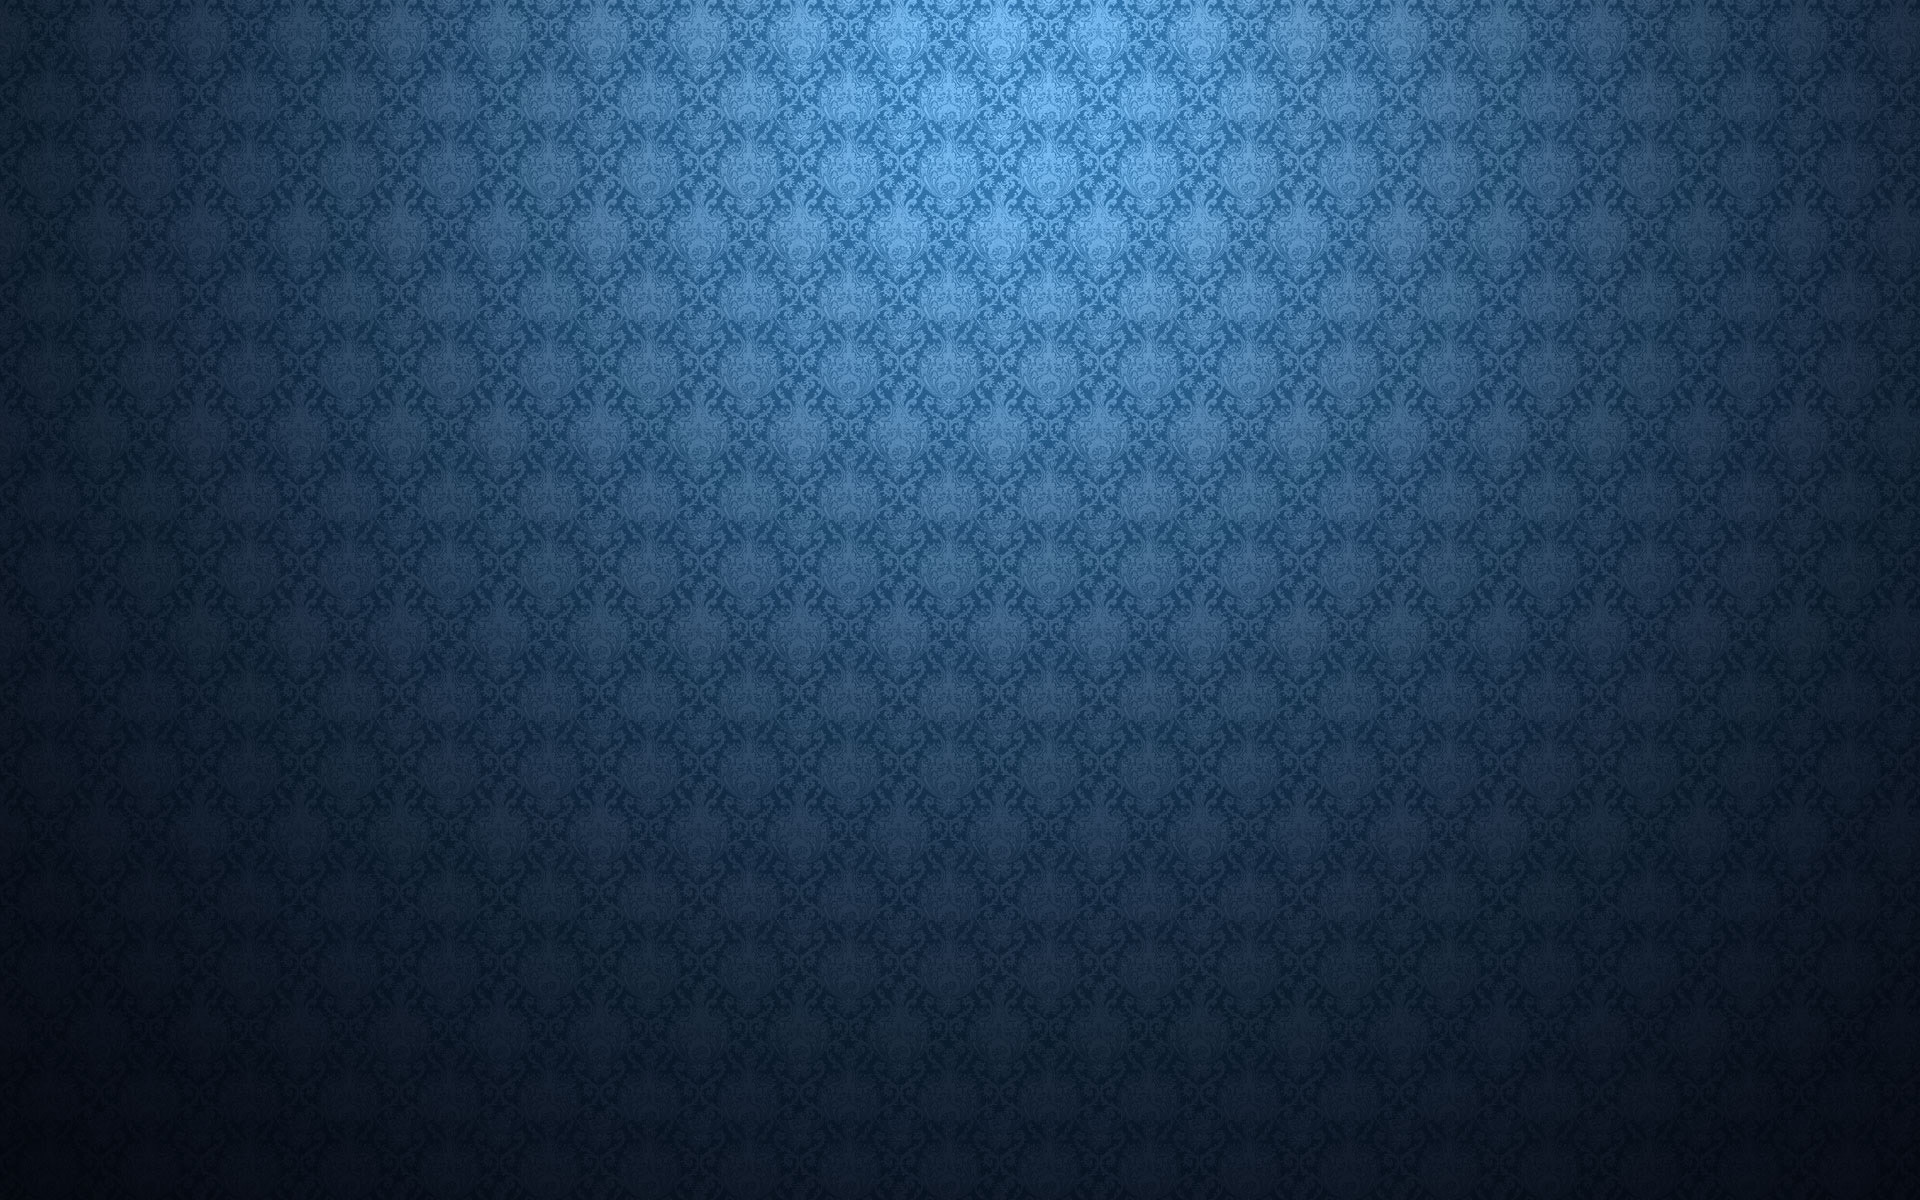 1920x1200 Cool Blue WallpapersHD Wallpapers 1920Ã1200 Blue Wallpapers (34 Wallpapers)  | Adorable Wallpapers